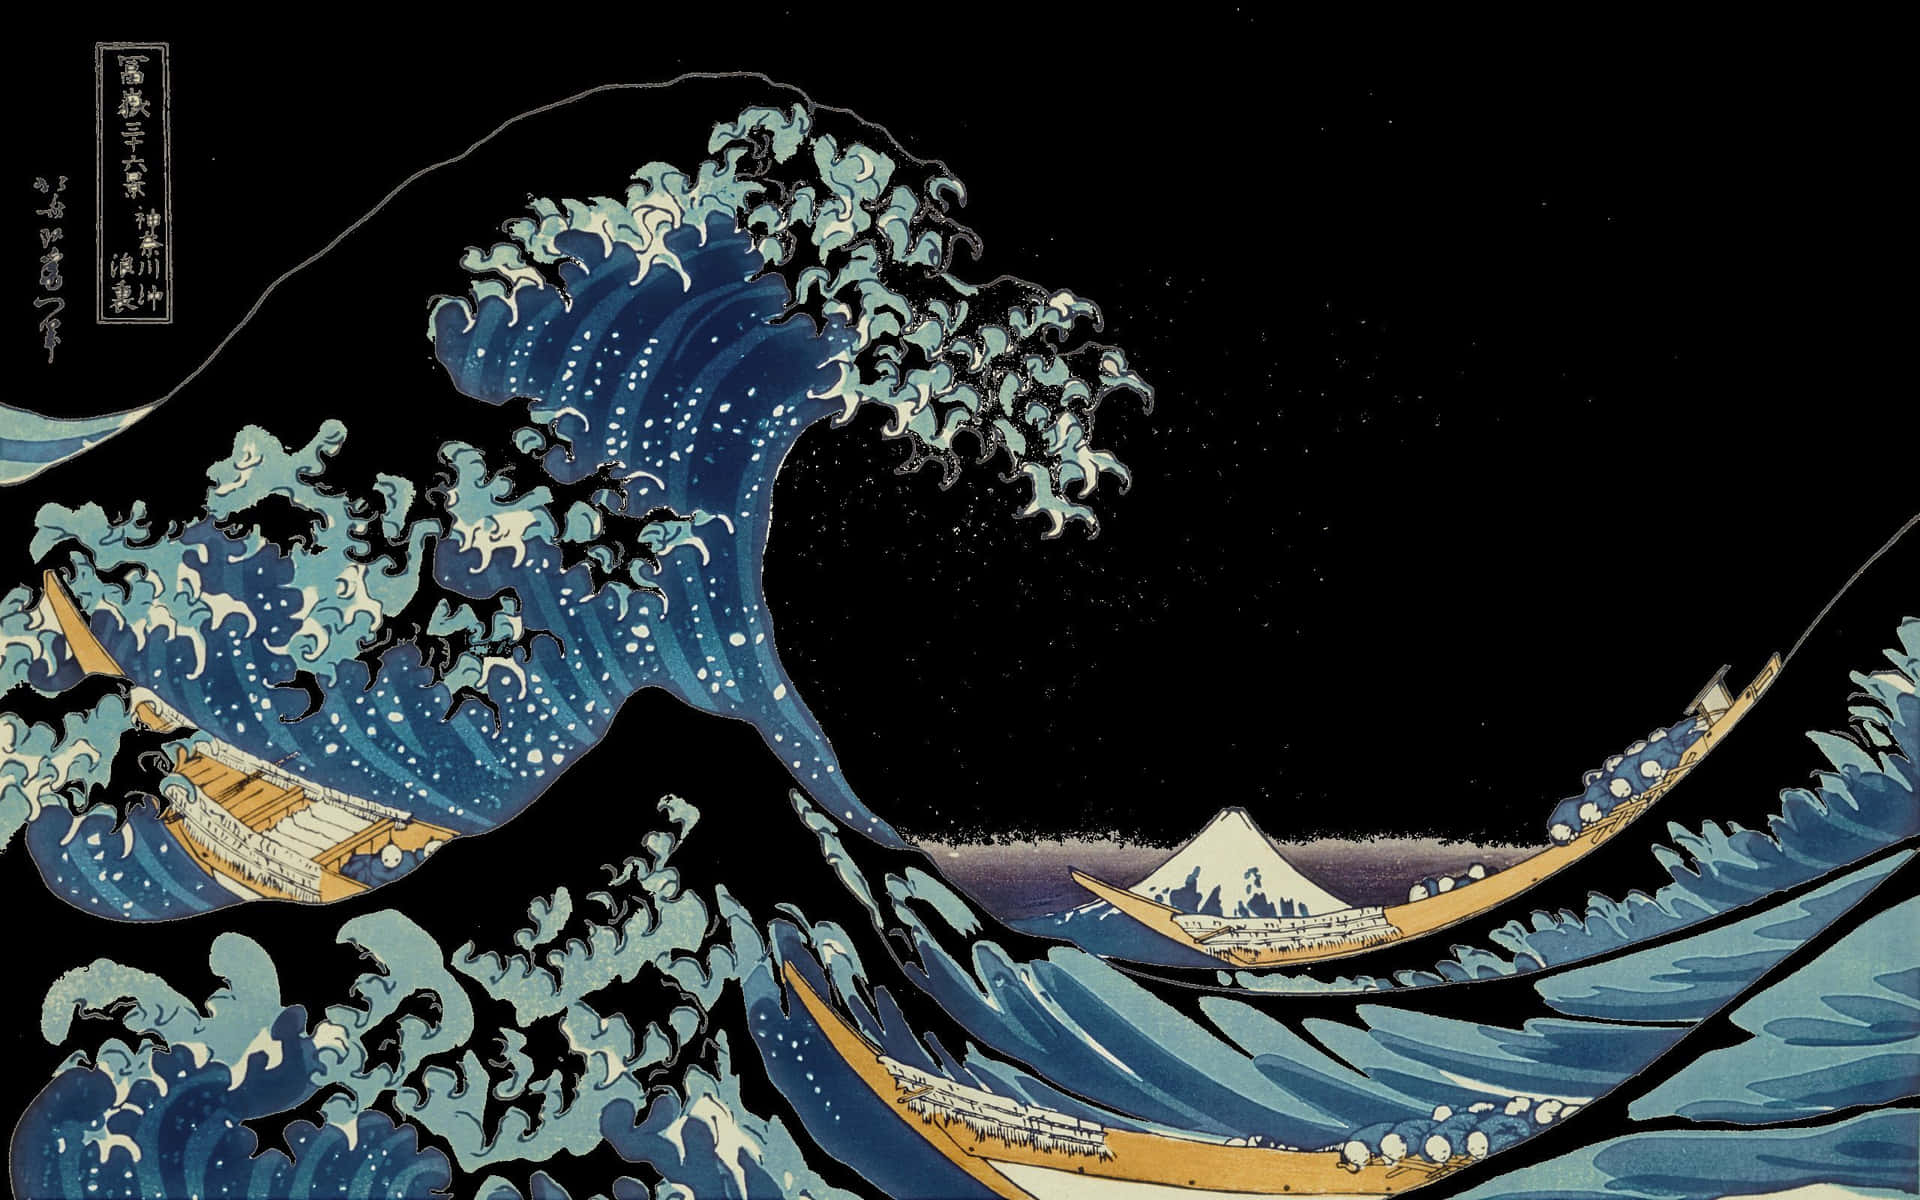 Download The Great Wave Off Kanagawa Wallpaper